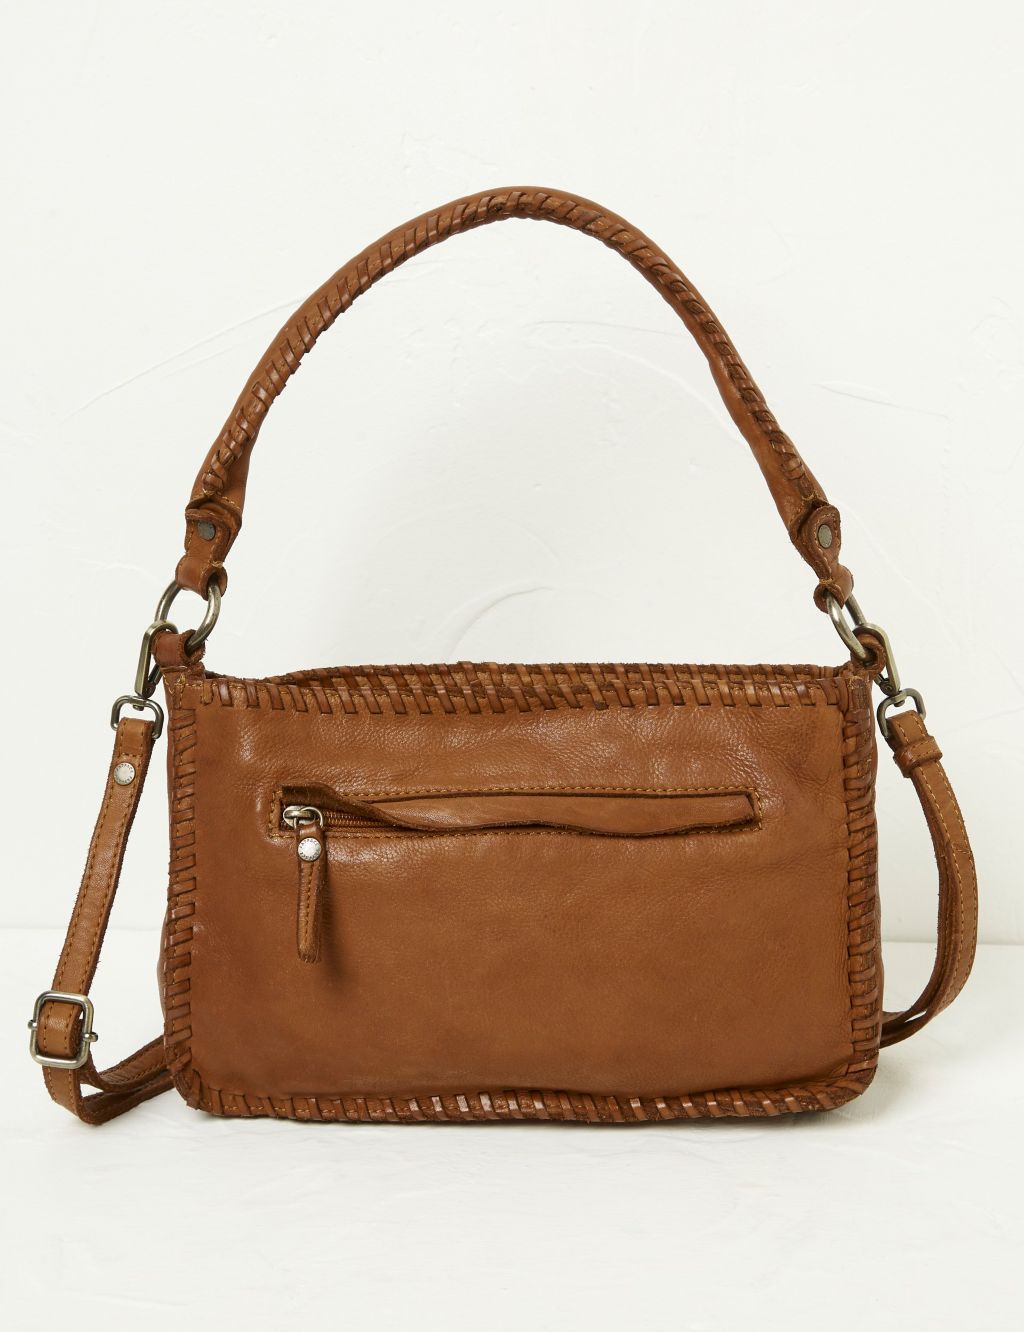 Leather Top Handle Cross Body Bag image 1